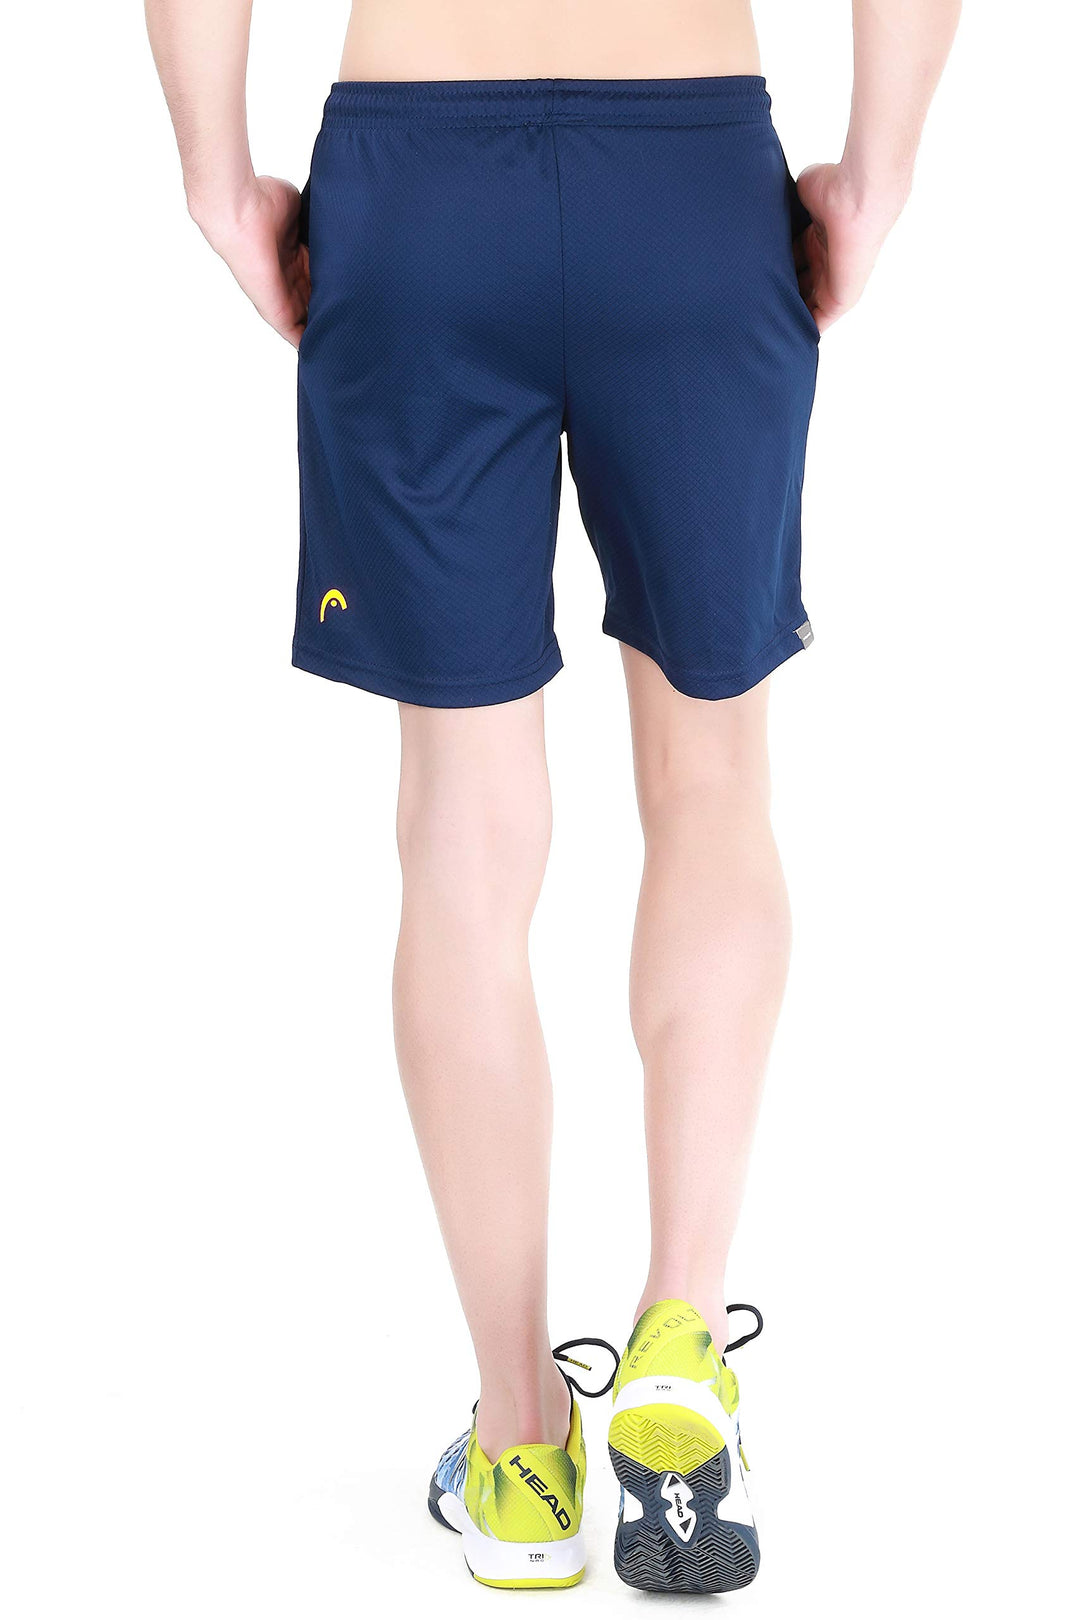 HBS-1091 Polyester Badminton Shorts for Mens | Size - Medium | Colour - Navy